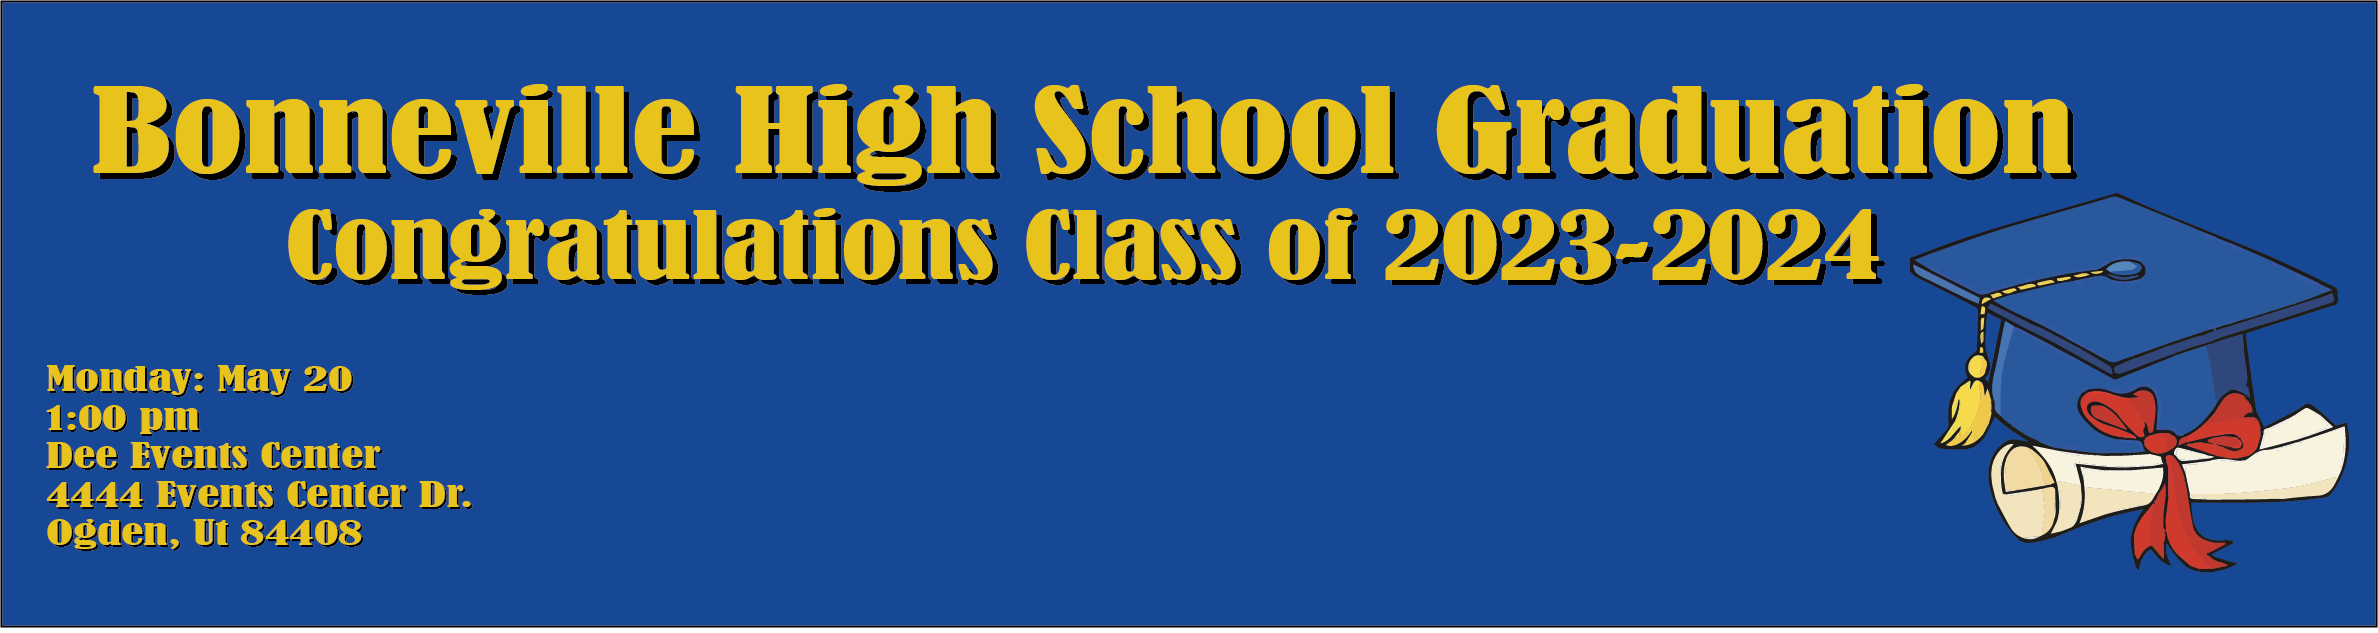 Bonneville High School Graduation, Congratulations Class of 2023-2024, Monday: May 20 1:00 pm  Dee Events Center 4444 Events Center Dr Ogden, Ut 84408